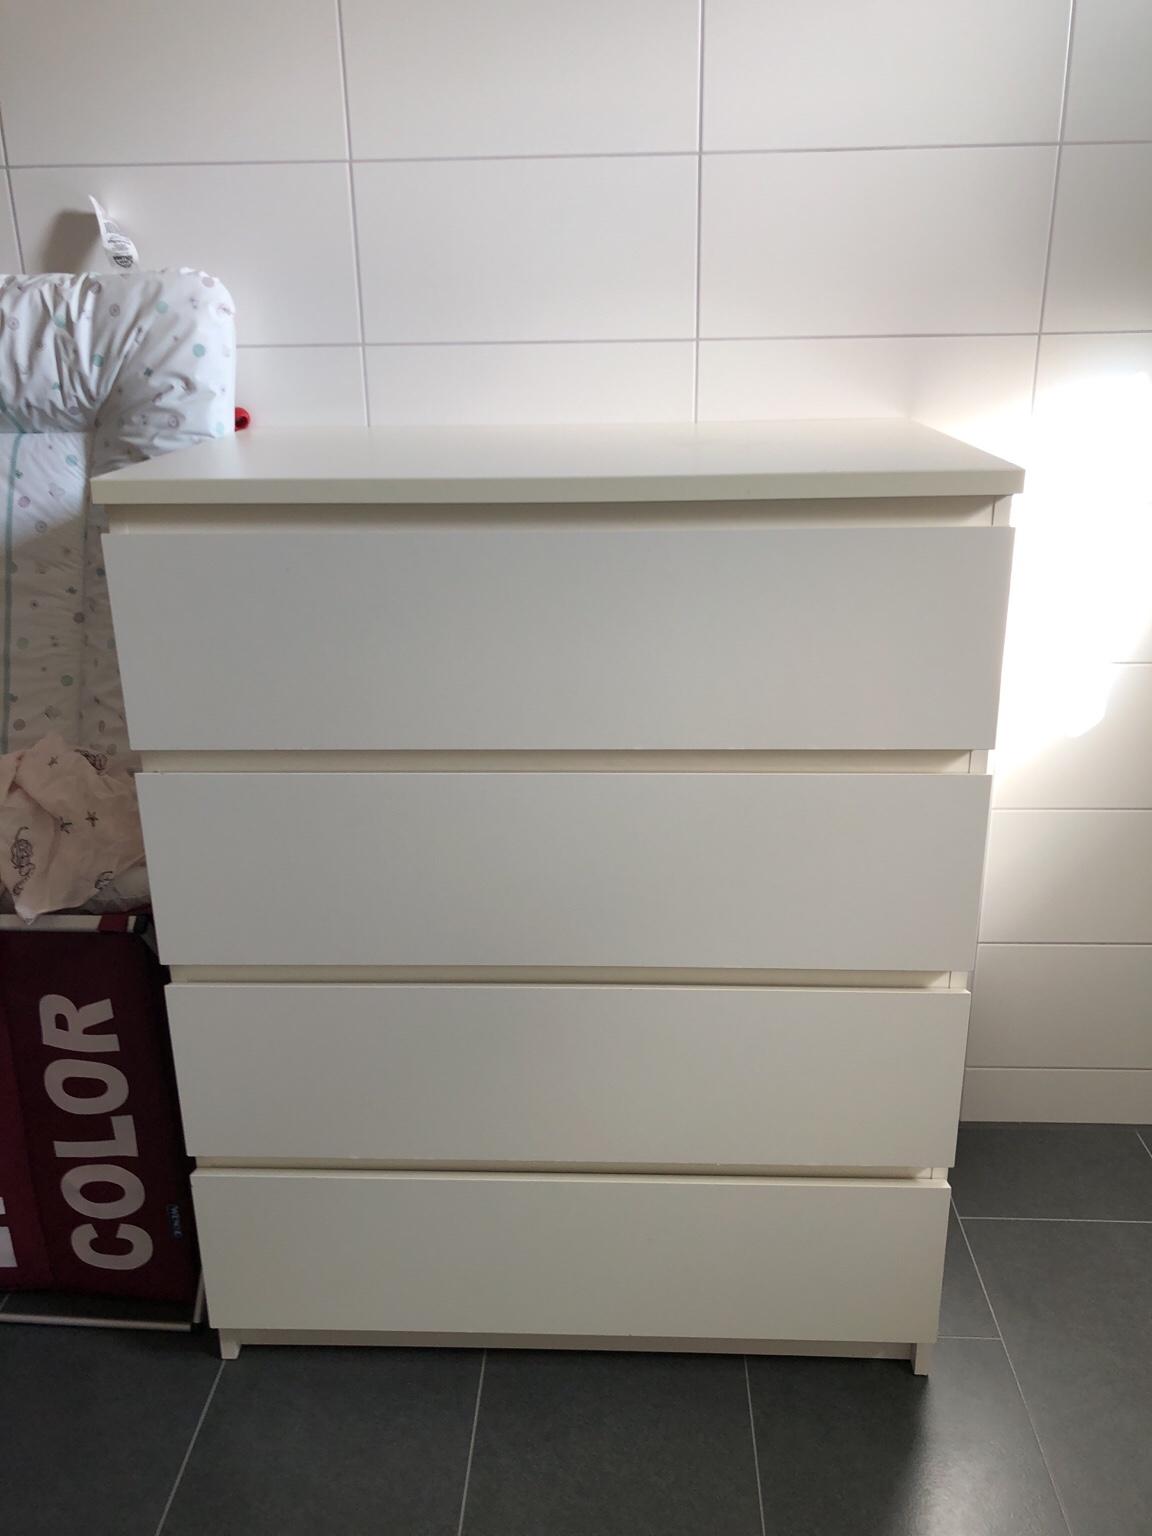  IKEA Malm  Kommode wei  in 91052 Erlangen f r 15 00  zum 